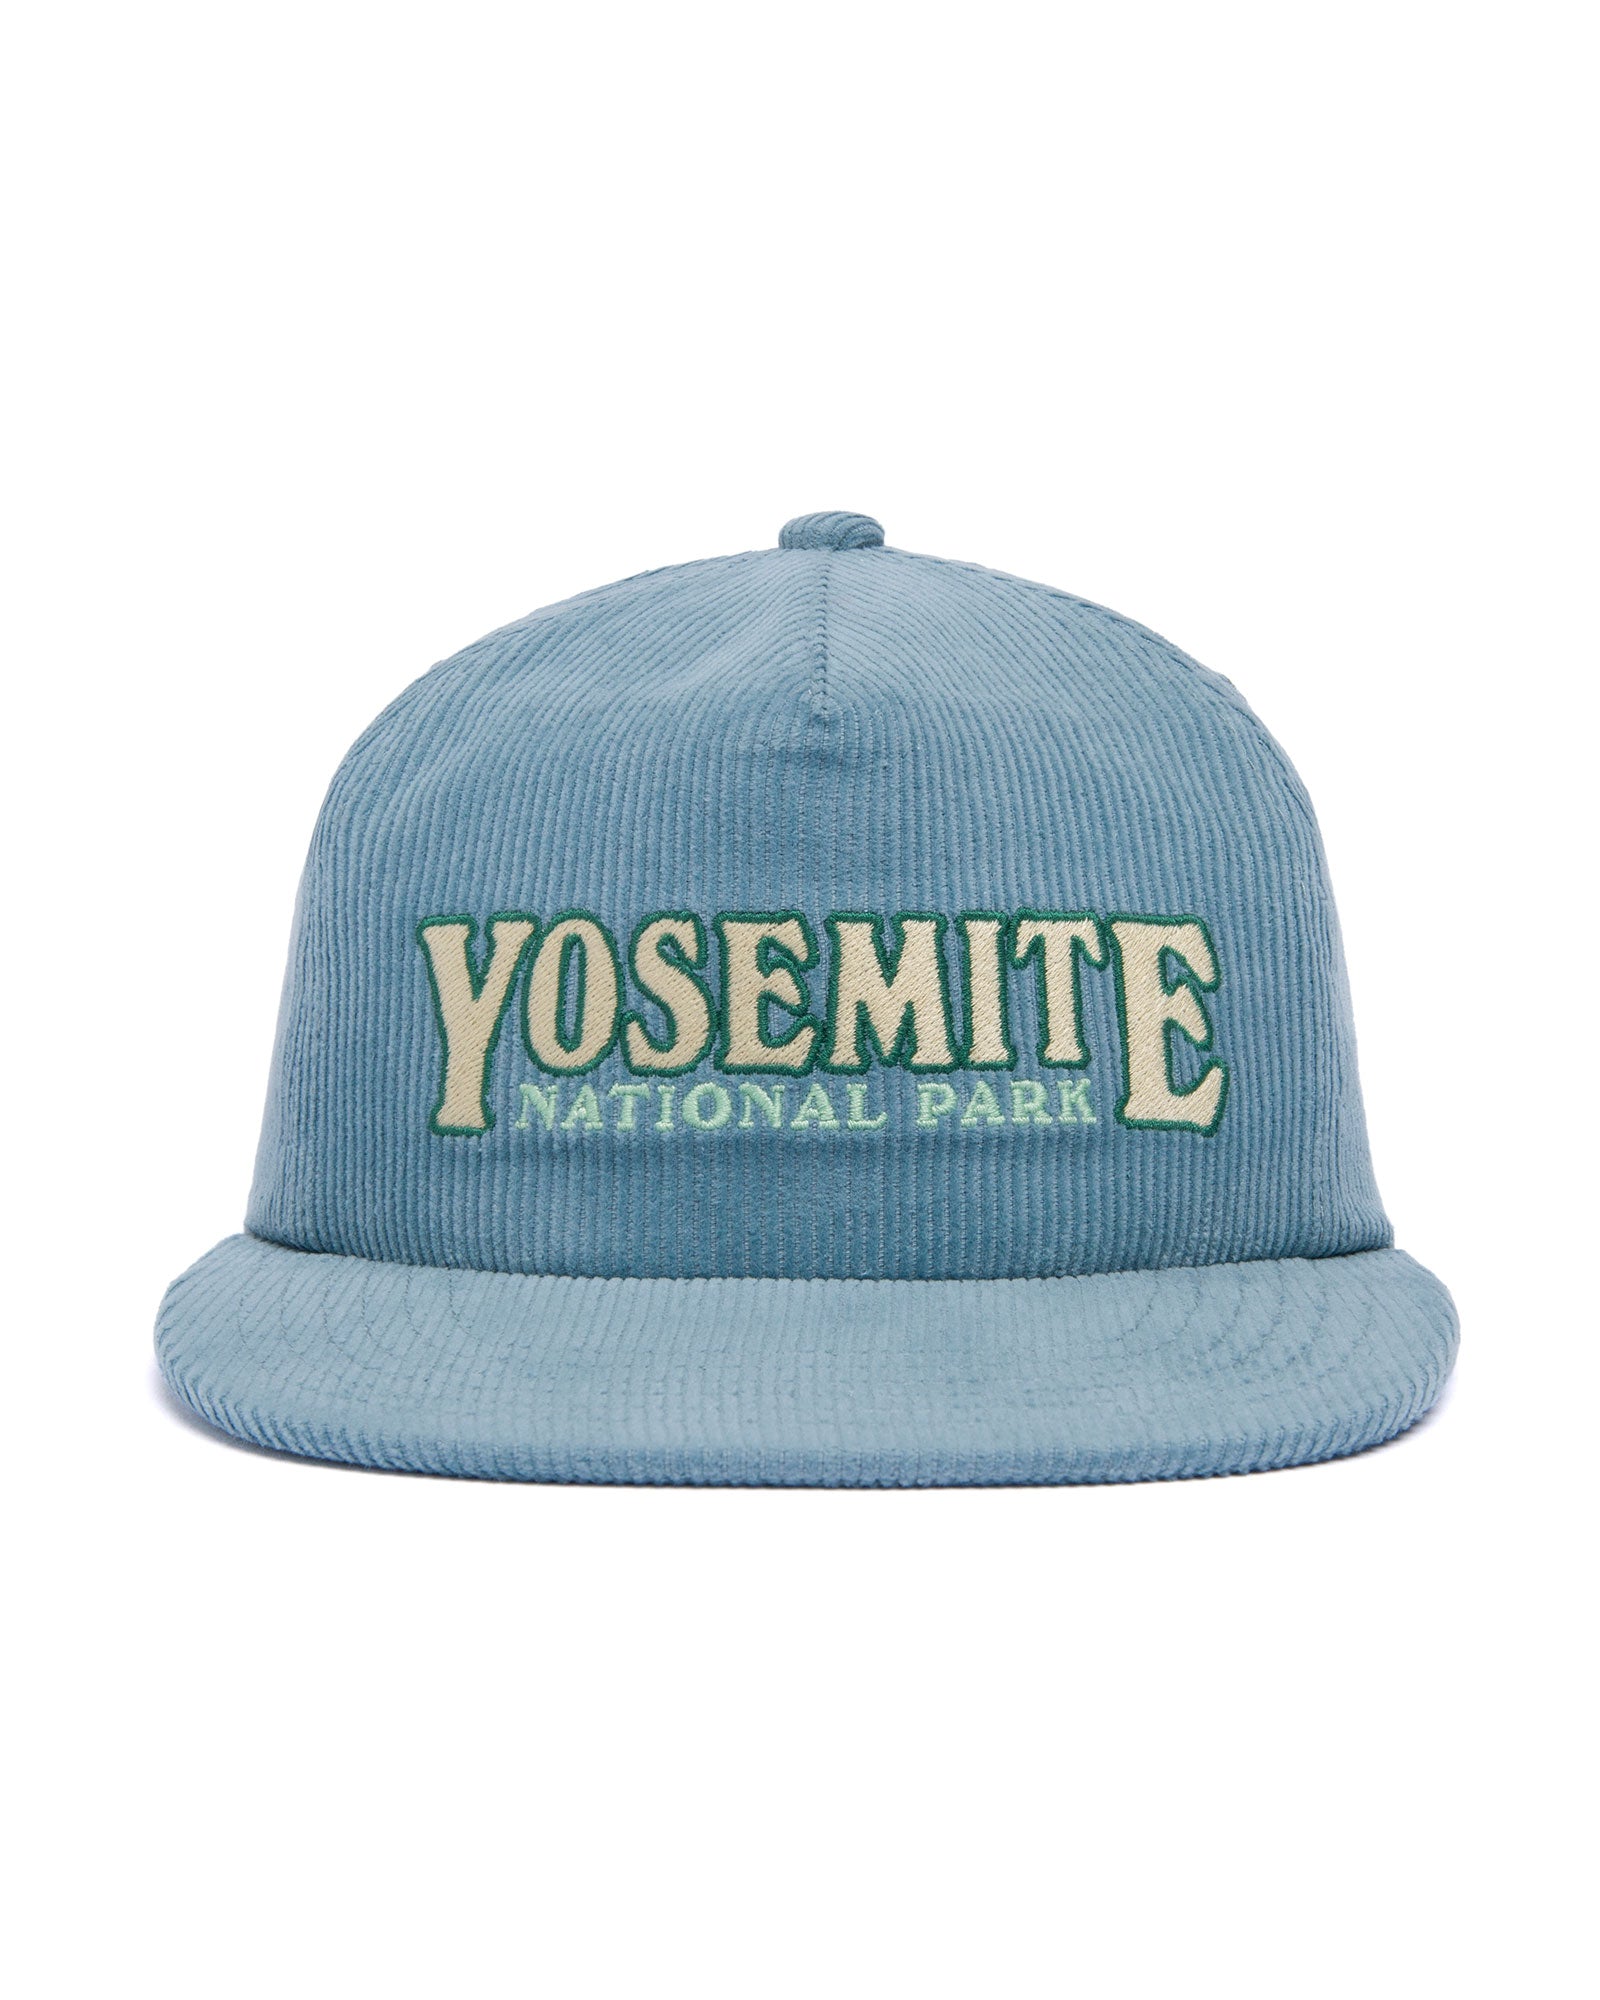 Shop Yosemite National Park Cord Hat Inspired by Yosemite National Park | dusty-teal